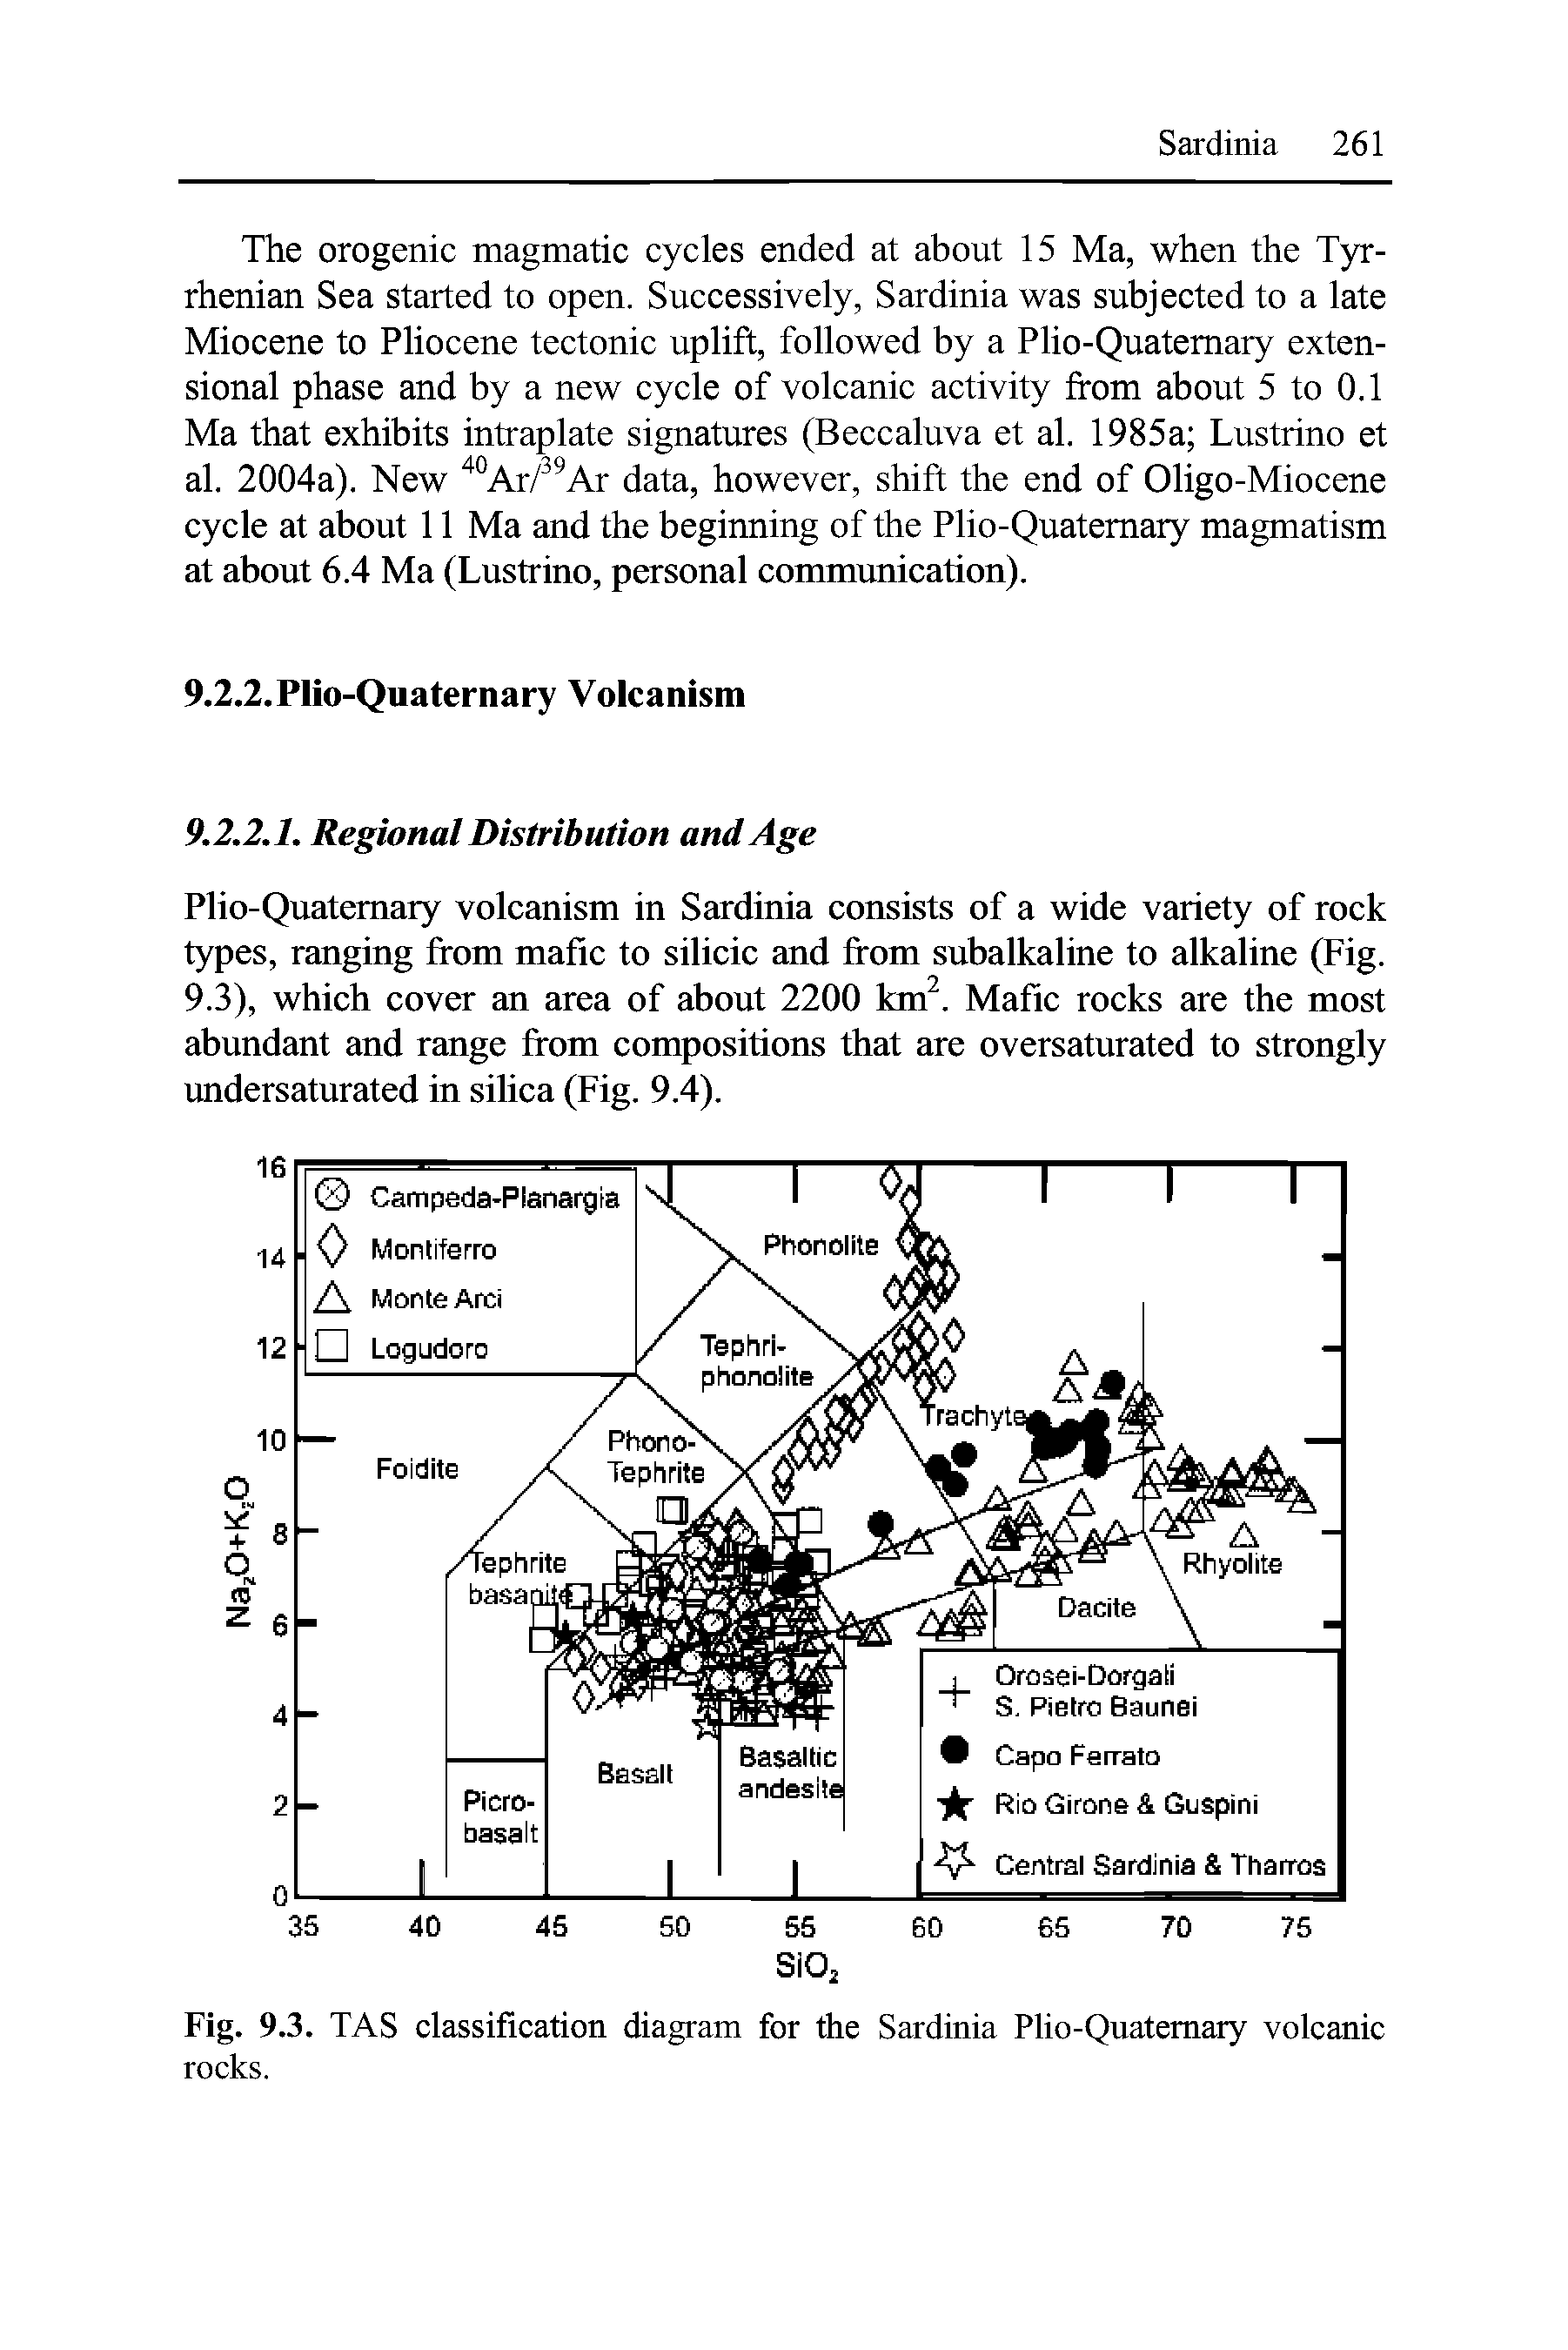 Fig. 9.3. TAS classification diagram for the Sardinia Plio-Quatemary volcanic rocks.